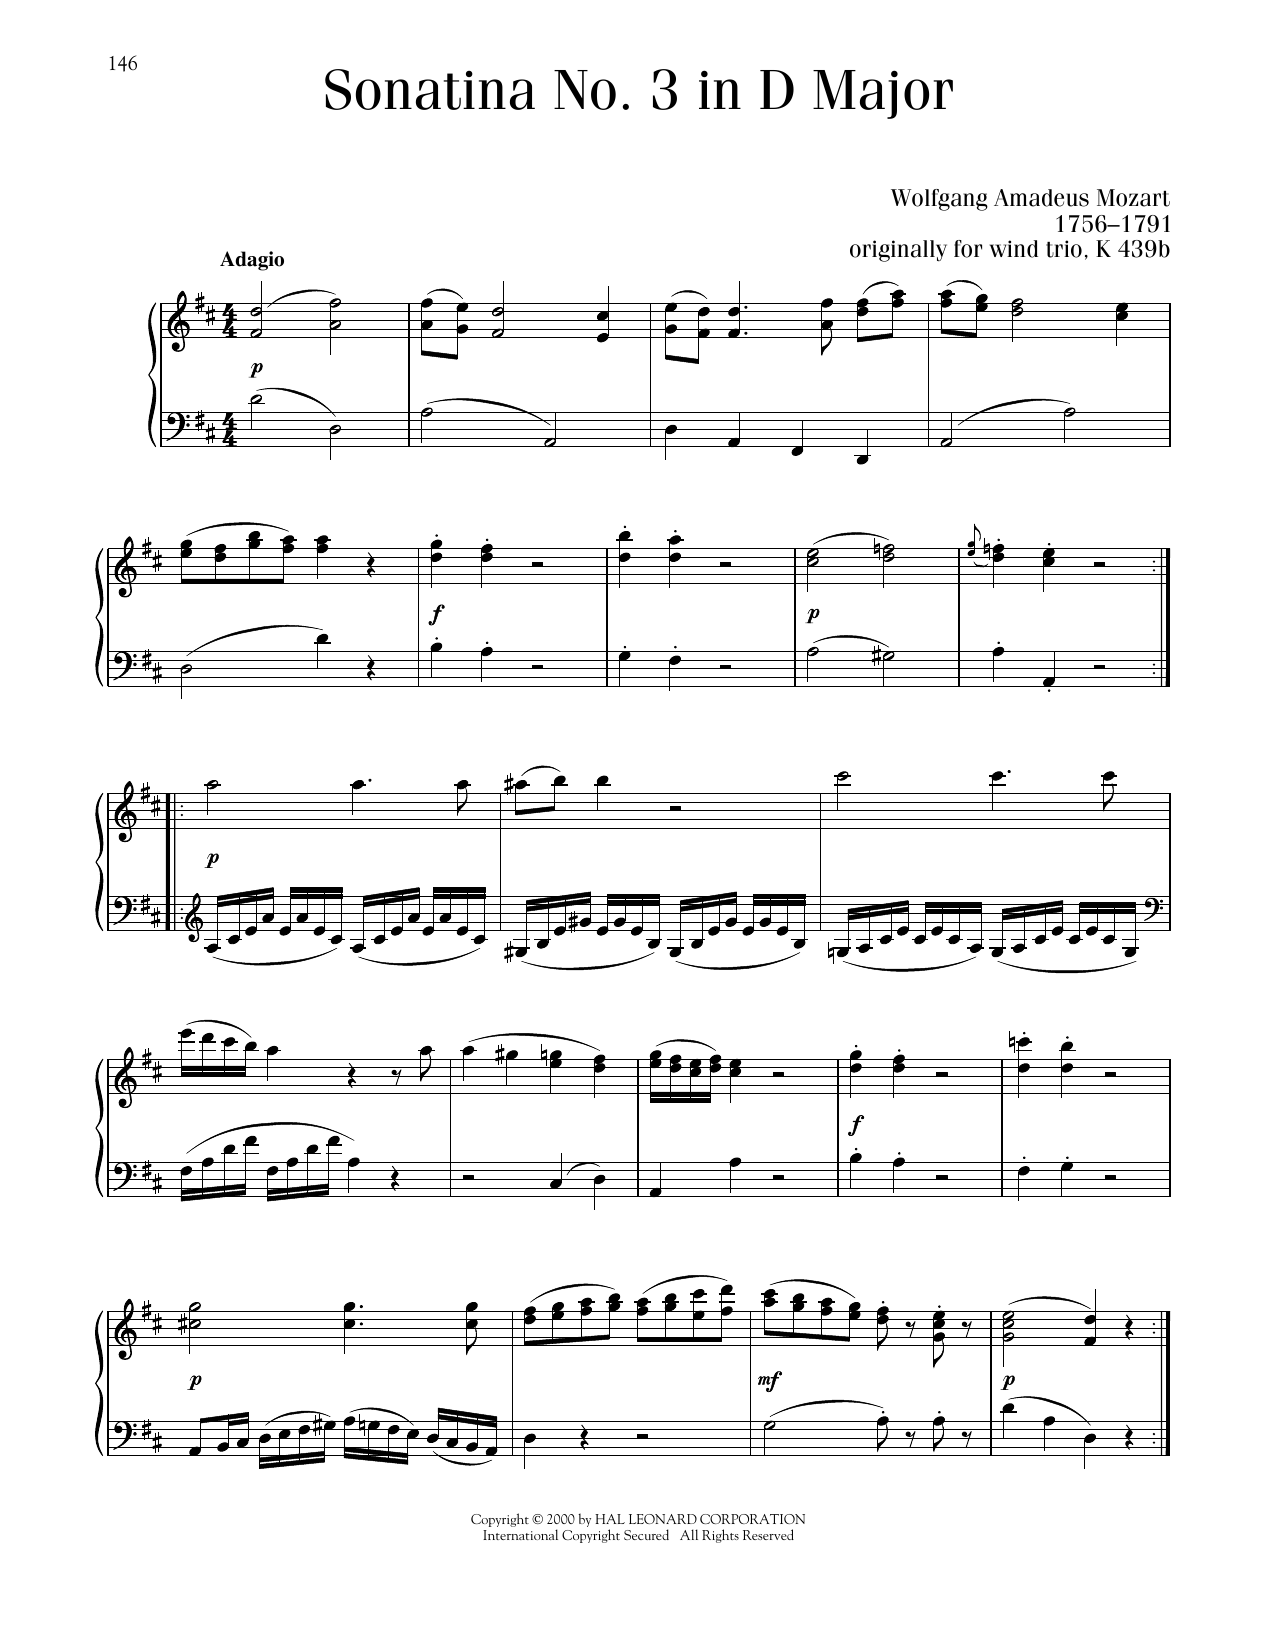 Wolfgang Amadeus Mozart Sonatina No. 3 In D Major sheet music notes printable PDF score